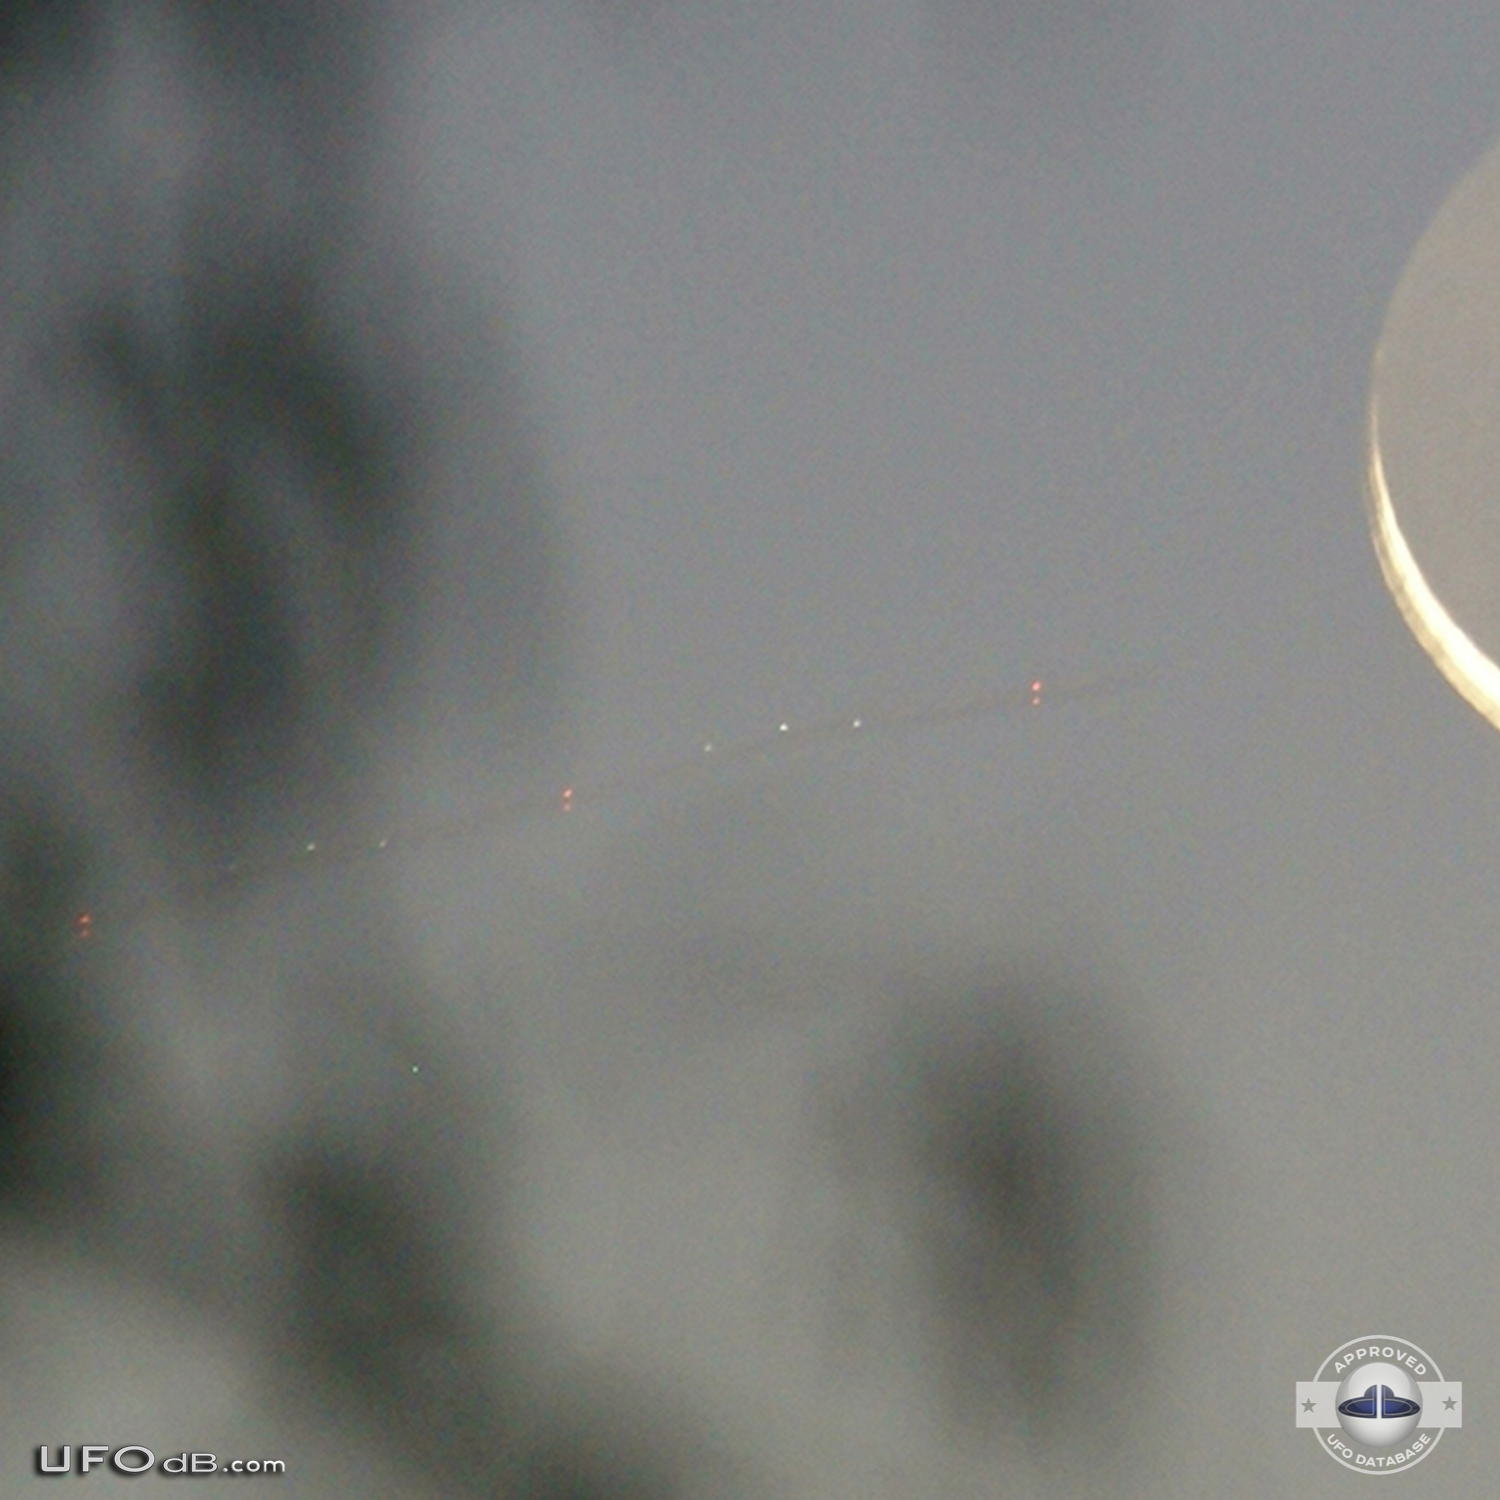 High quality Photo captures a Huge long UFO - Melbourne Australia 2009 UFO Picture #523-3